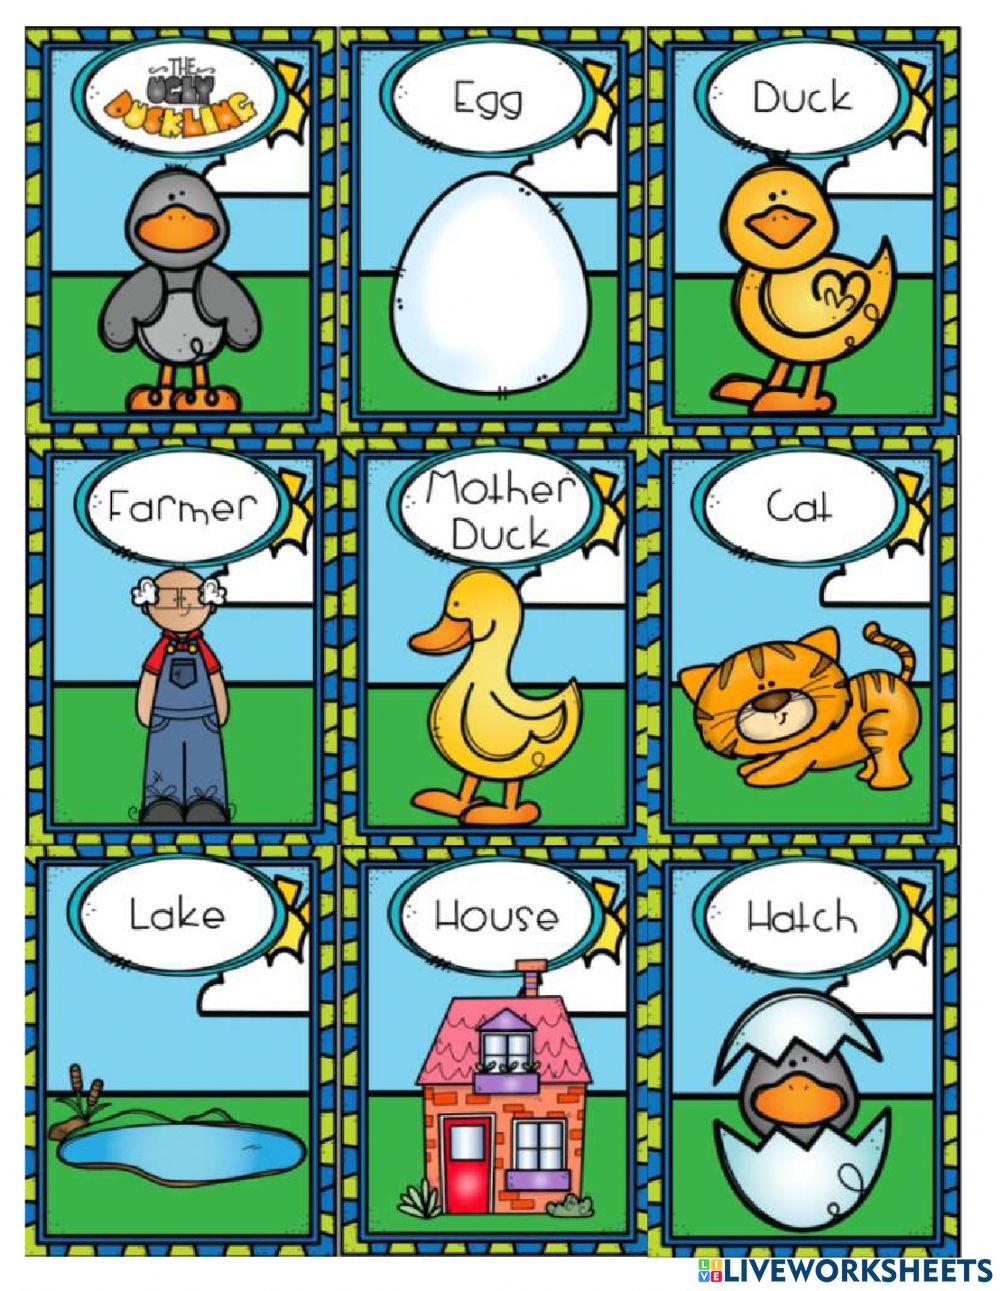 Ugly duckling bingo card 1